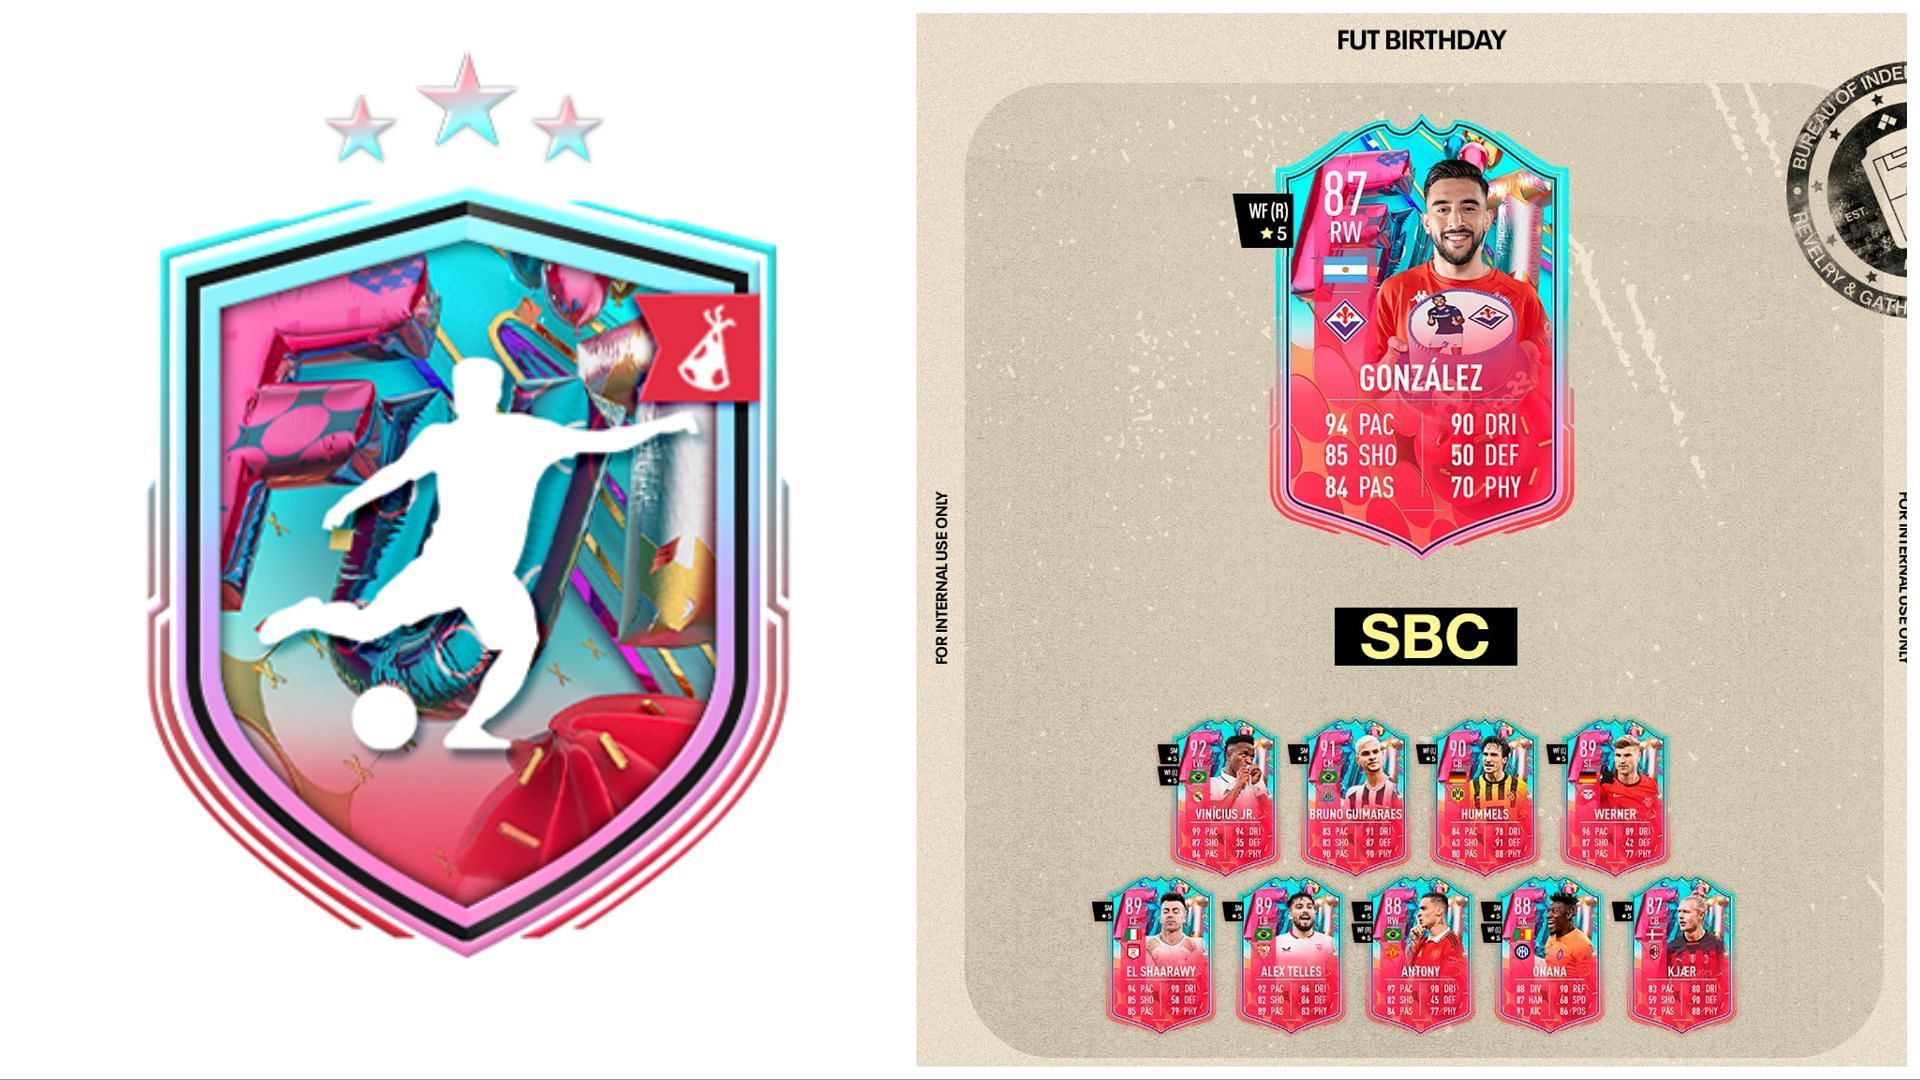 Nicolas Gonzalez is now available as an SBC (Images via EA Sports)